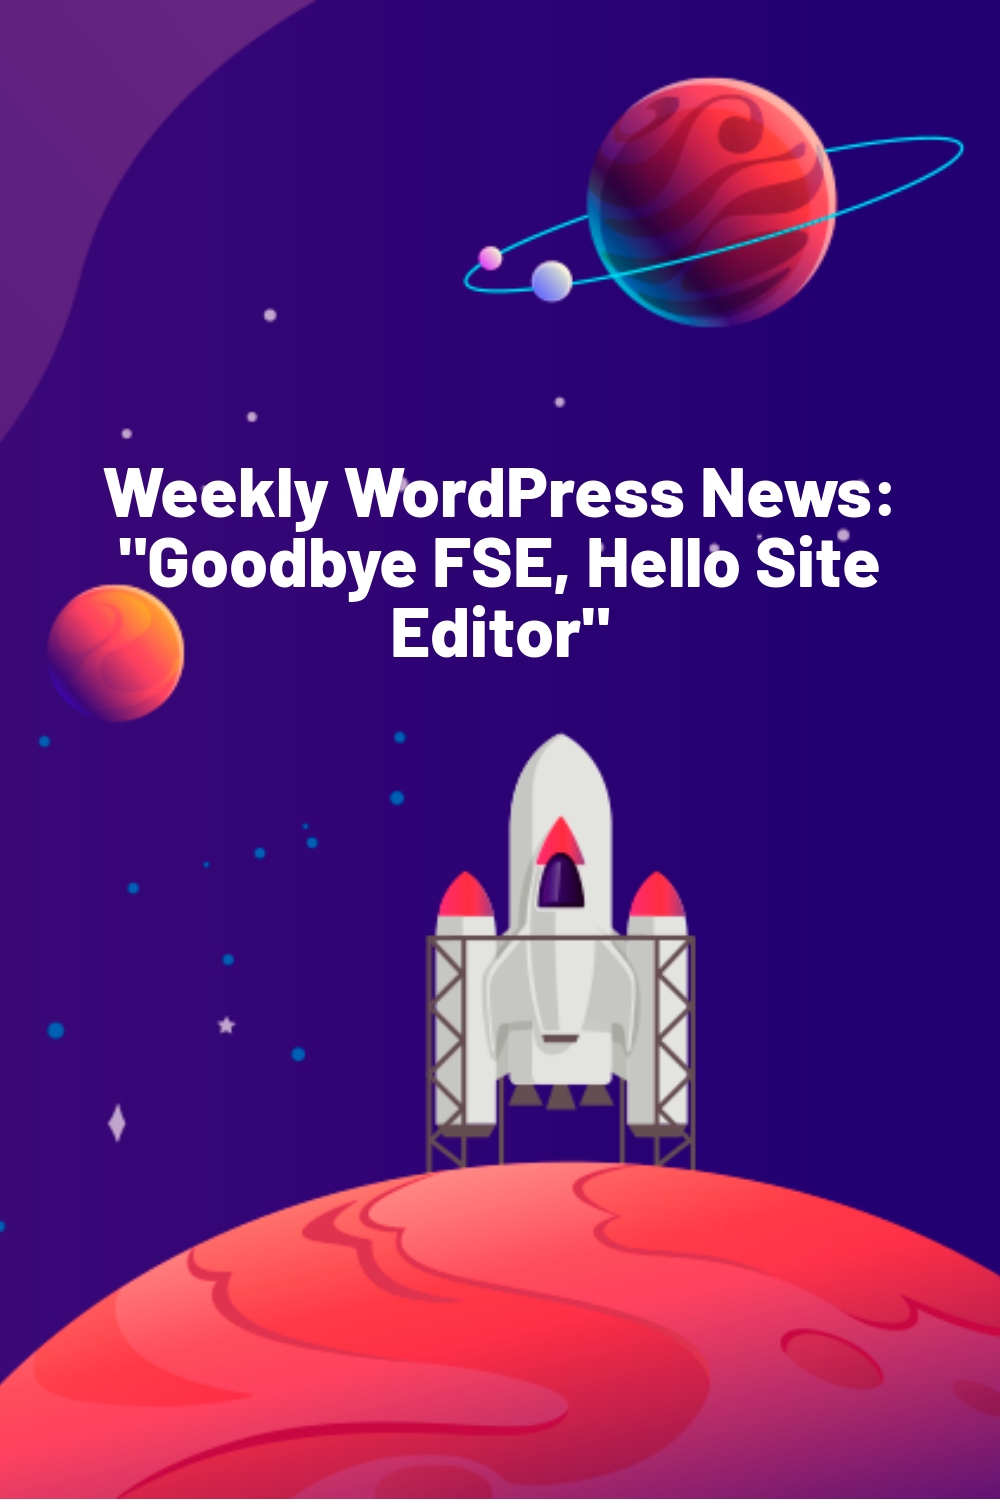 Weekly WordPress News: “Goodbye FSE, Hello Site Editor”